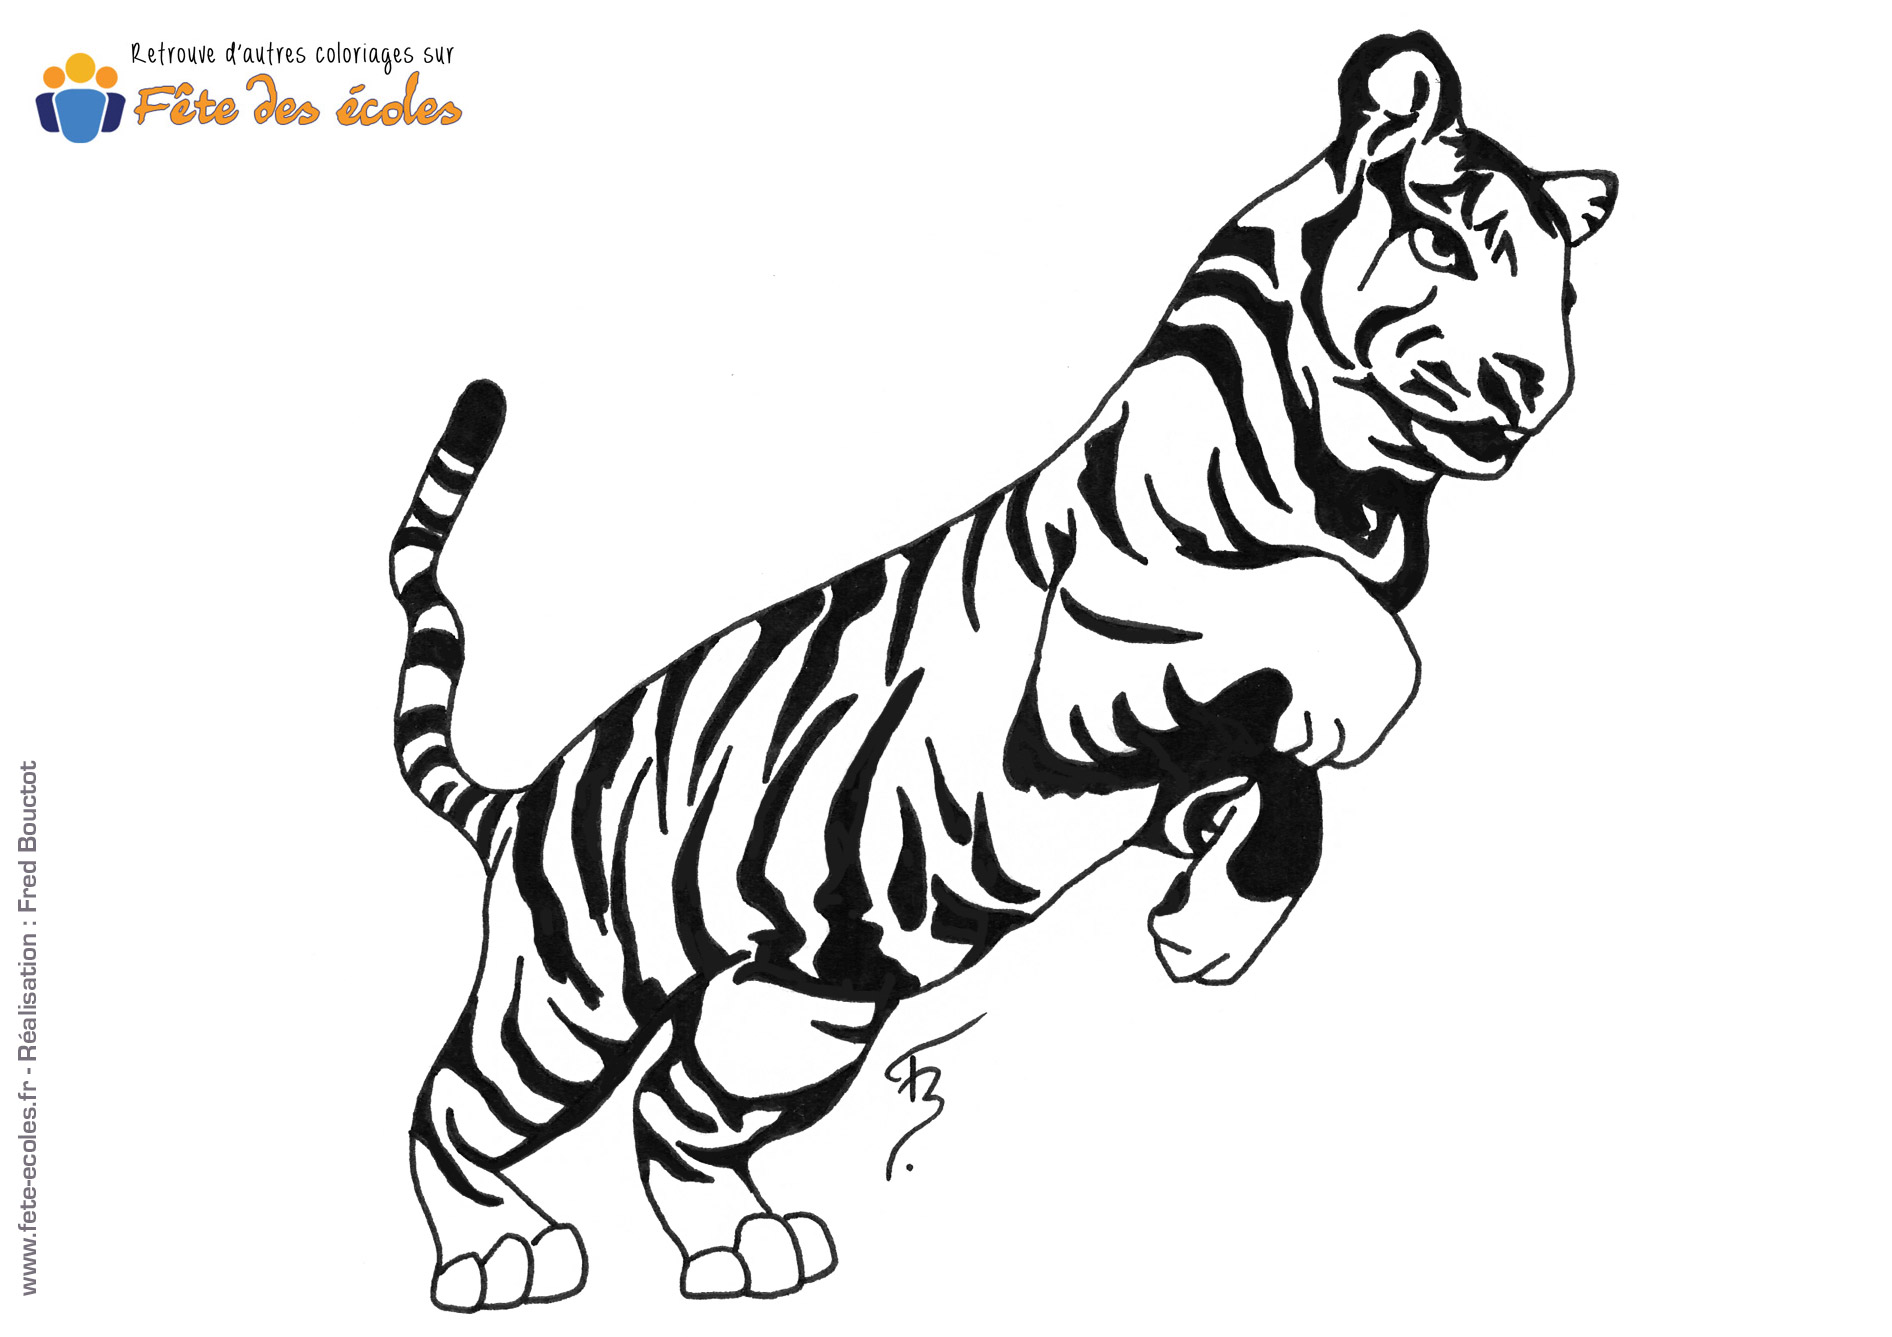 Coloriage d'un tigre de cirque qui saute